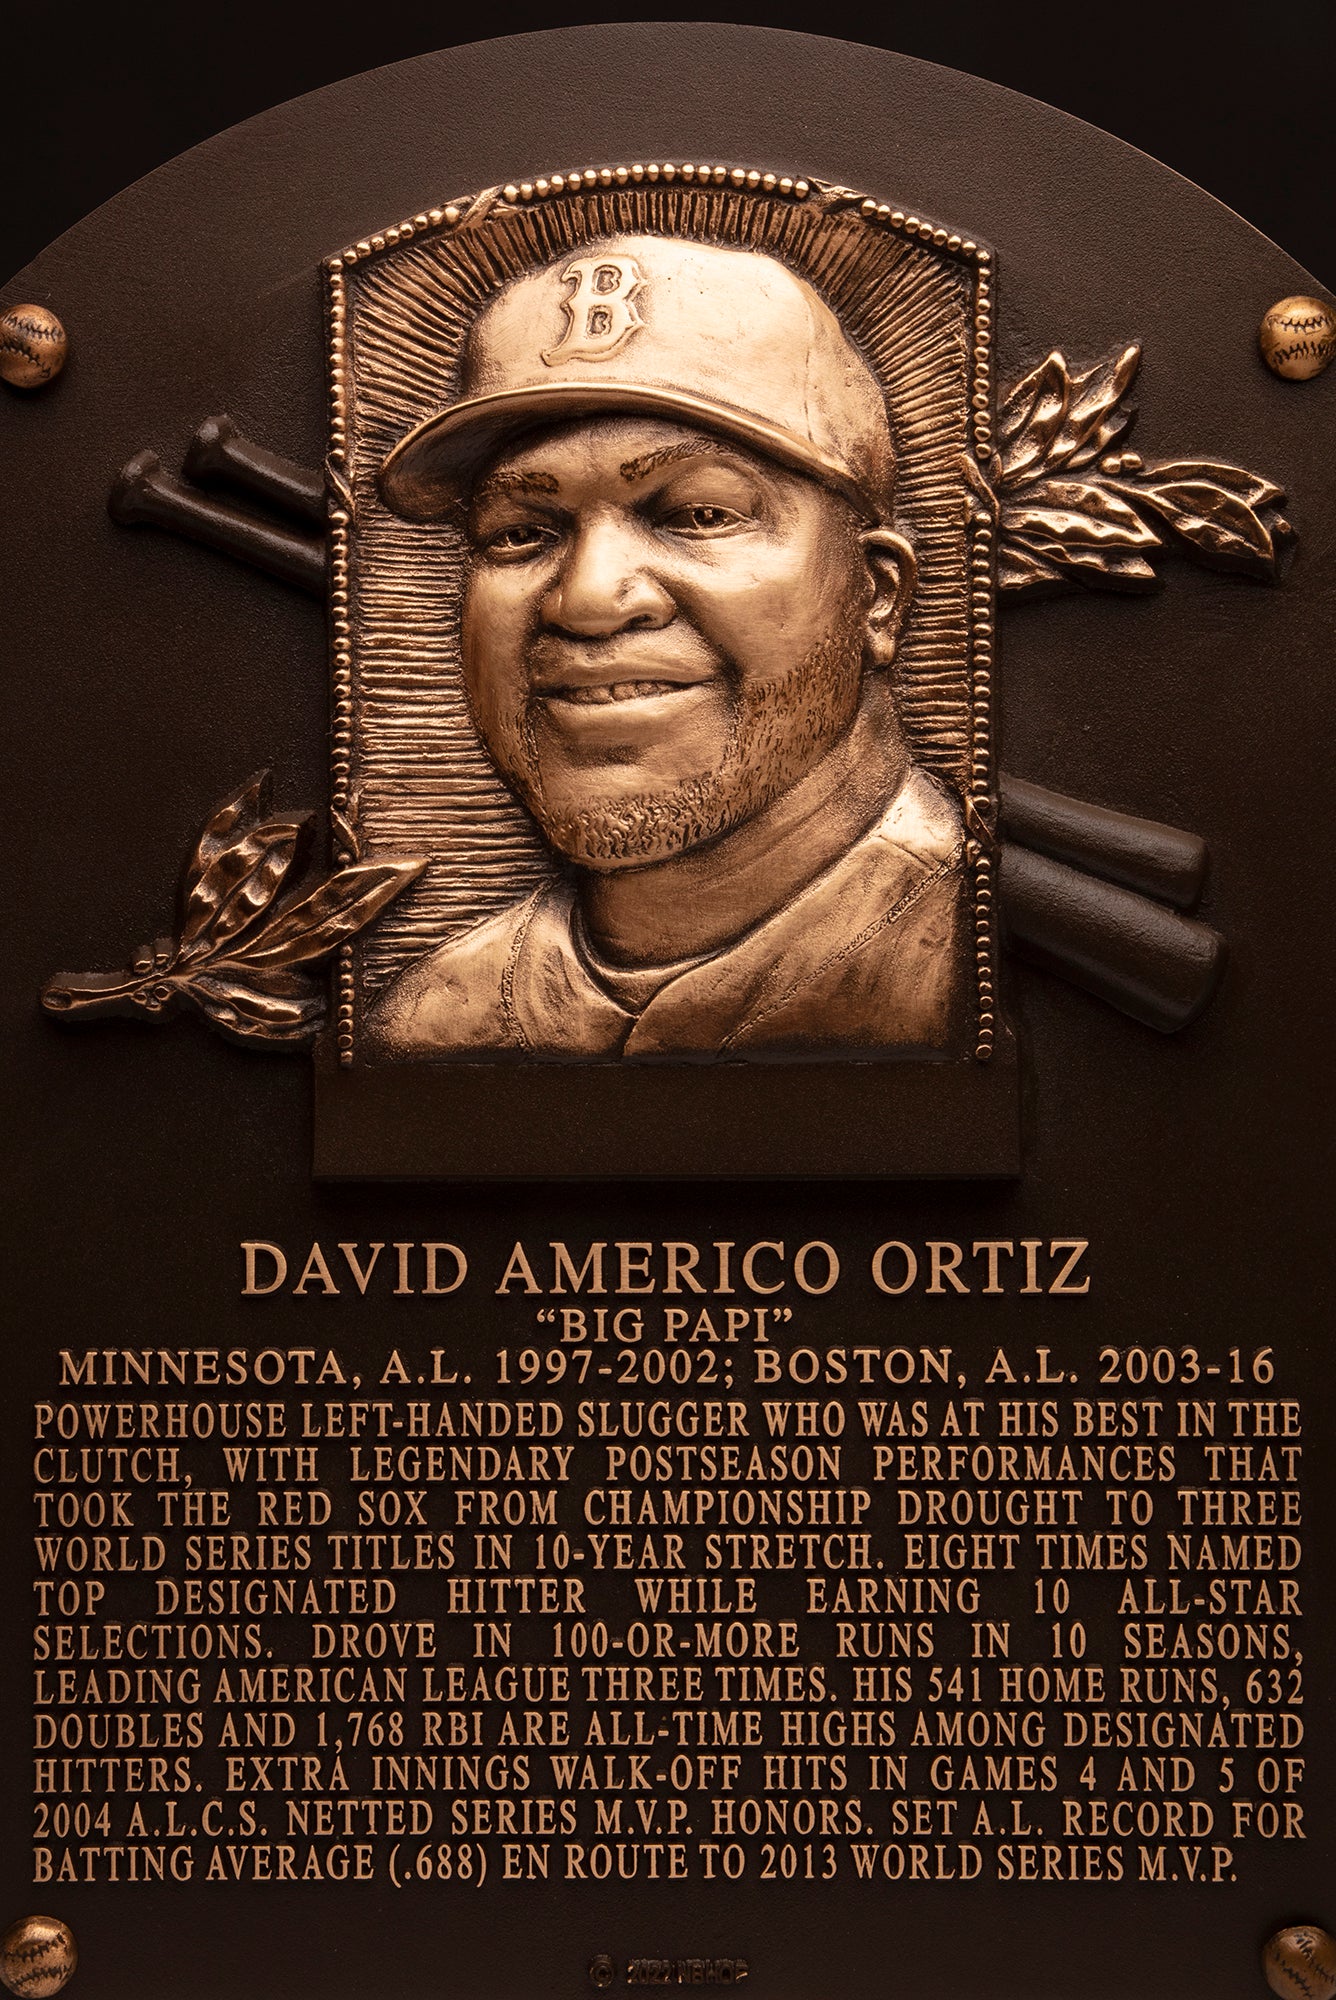 David Ortiz Hall of Fame plaque